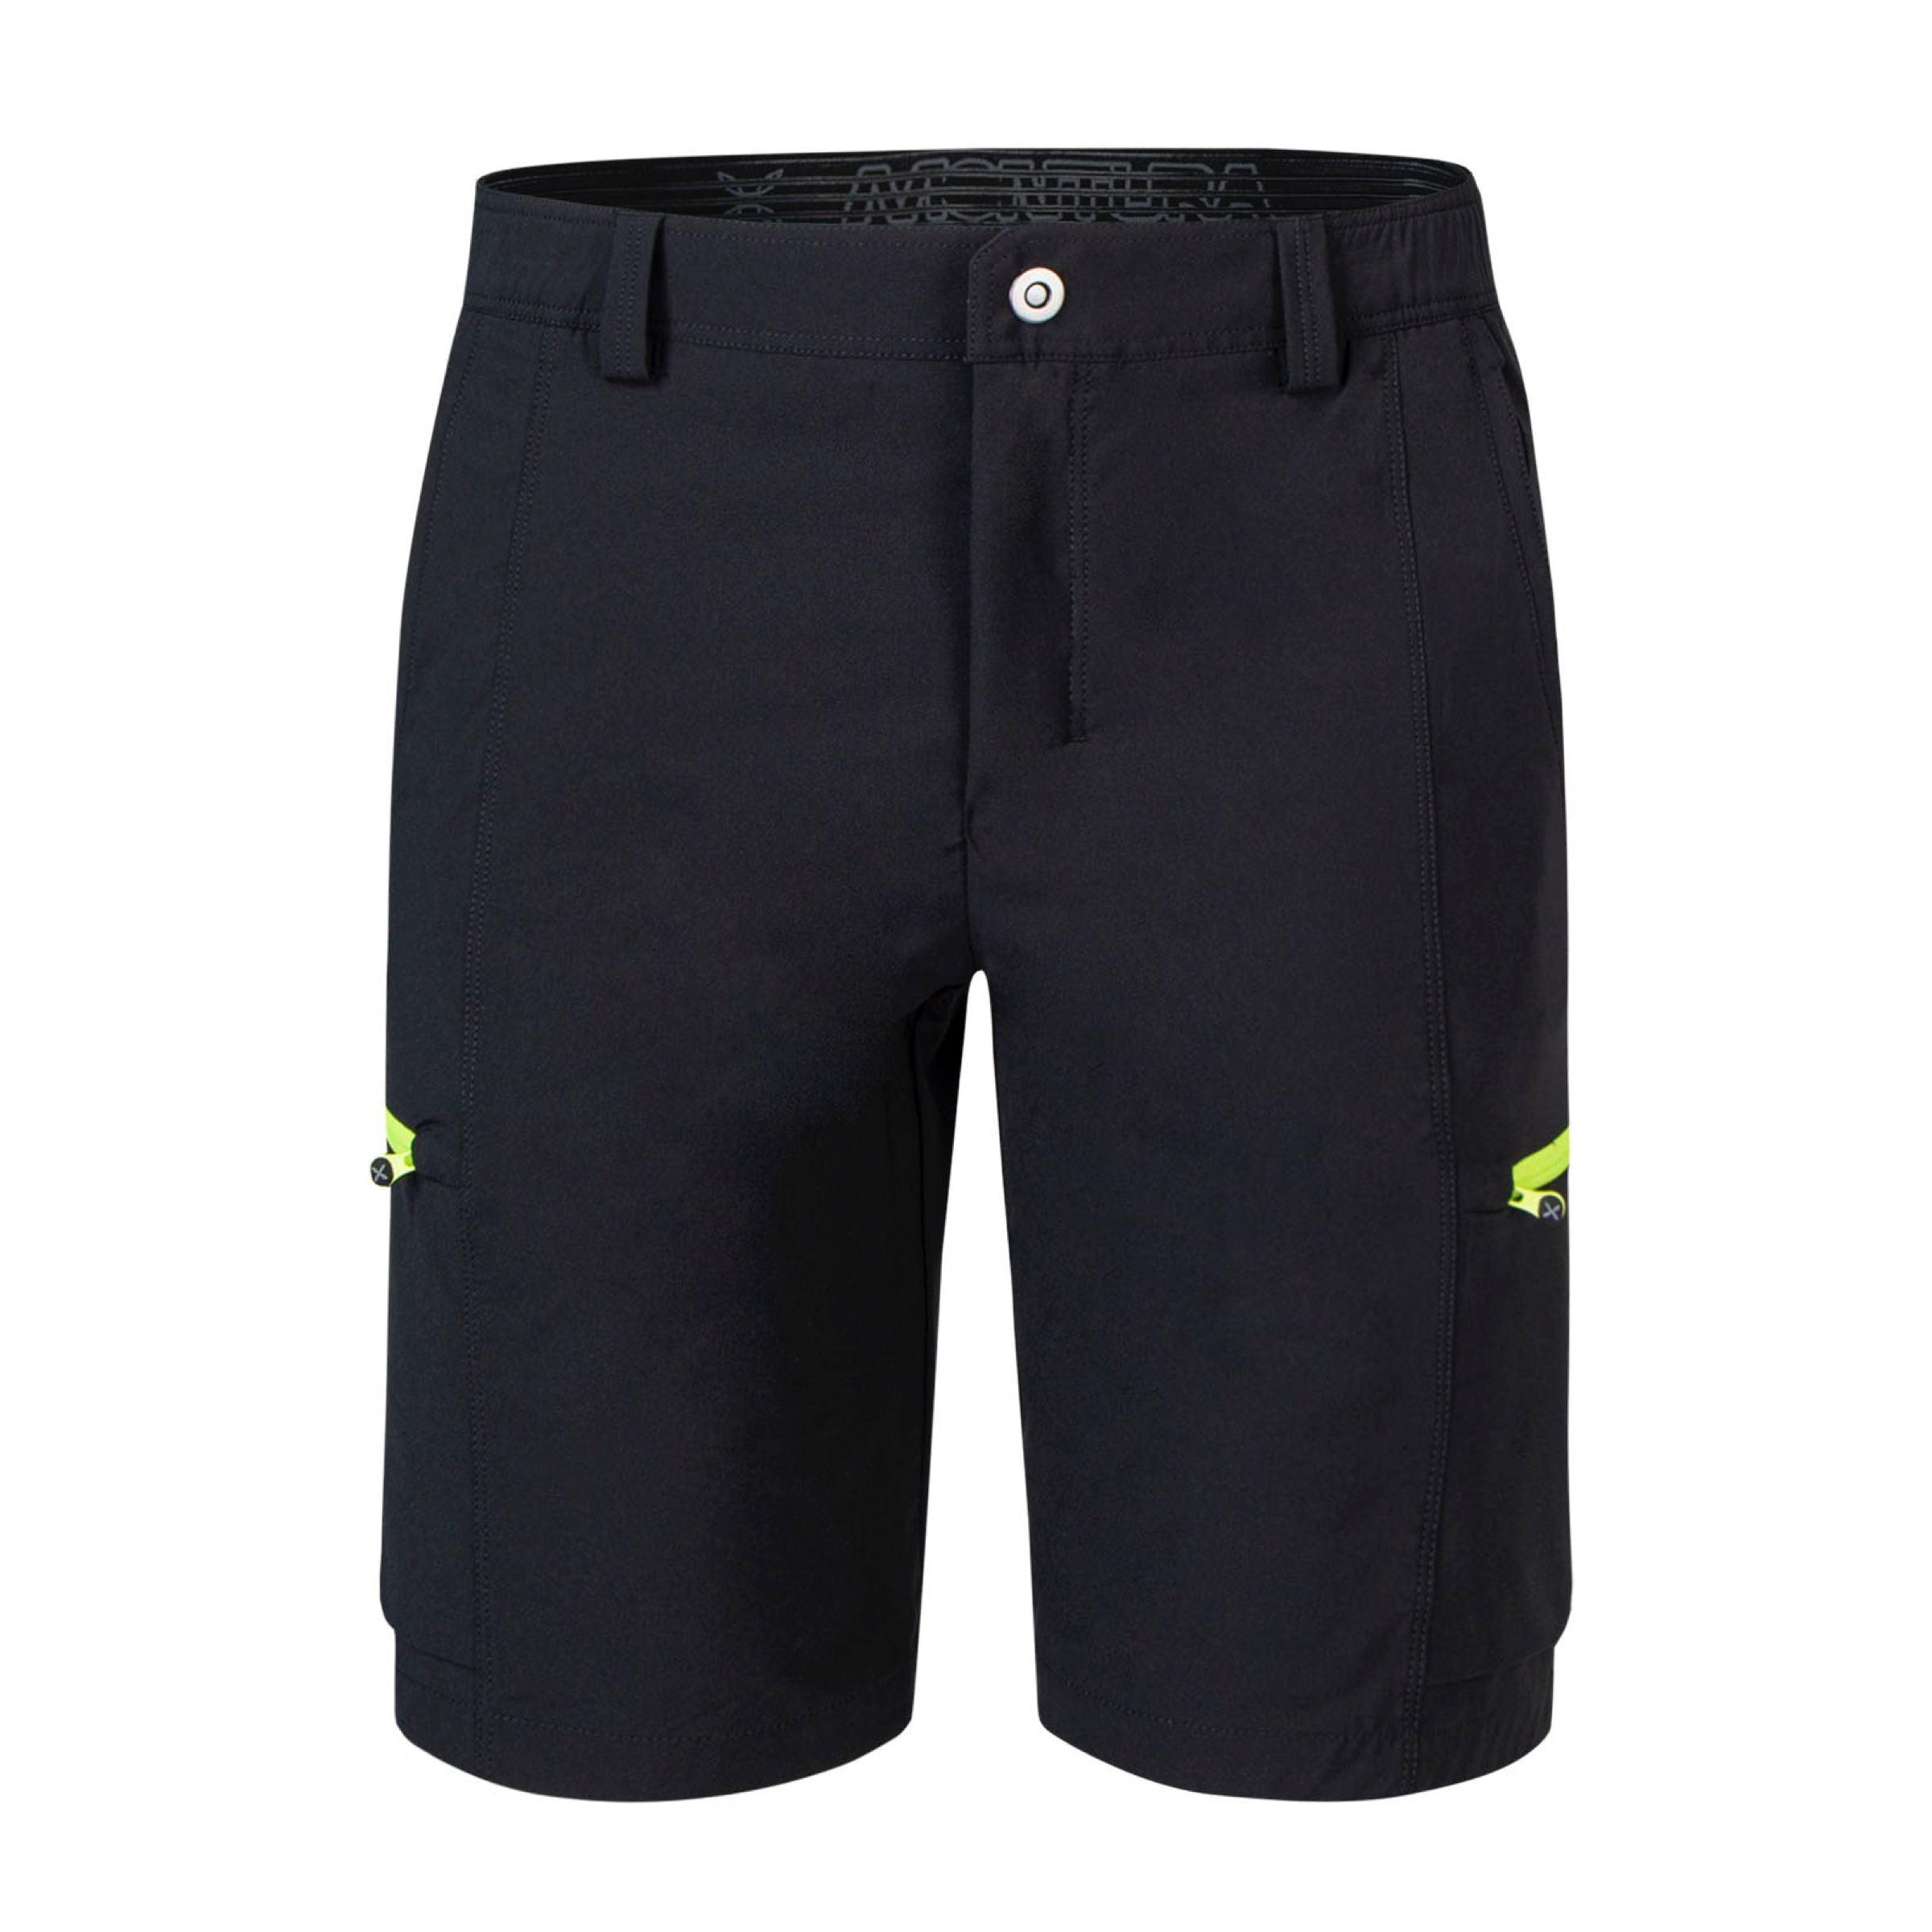 Montura | Pantaloncini Stretch Light Uomo Nero/Verde Lime - Fabbrica Ski Sises